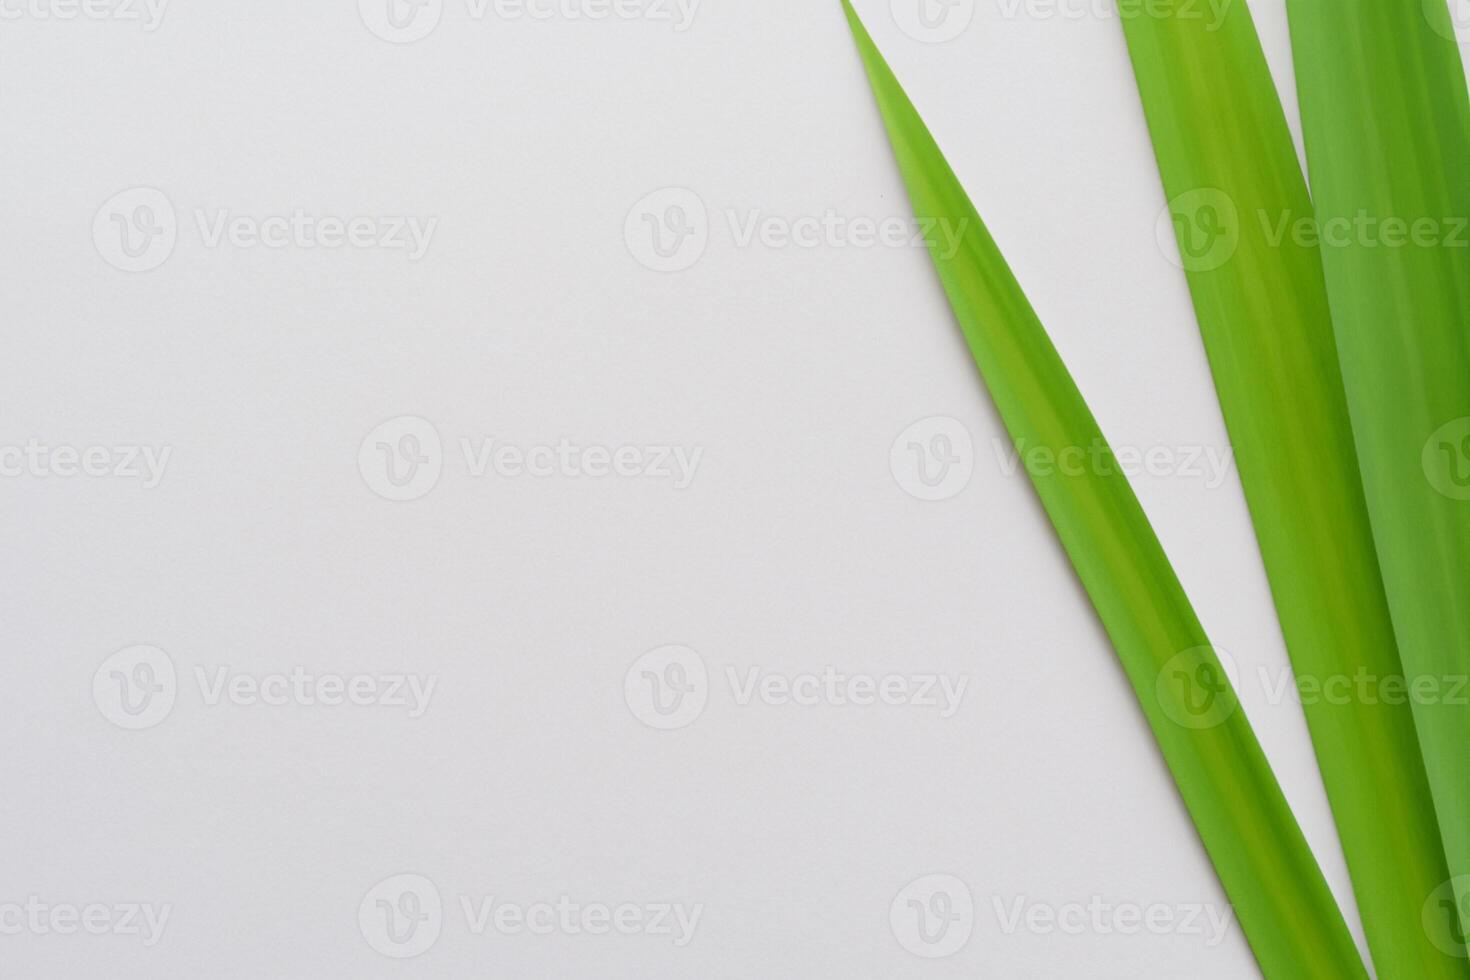 pandan blad vilar på vit papper, en blandning av naturens friskhet på en rena duk foto